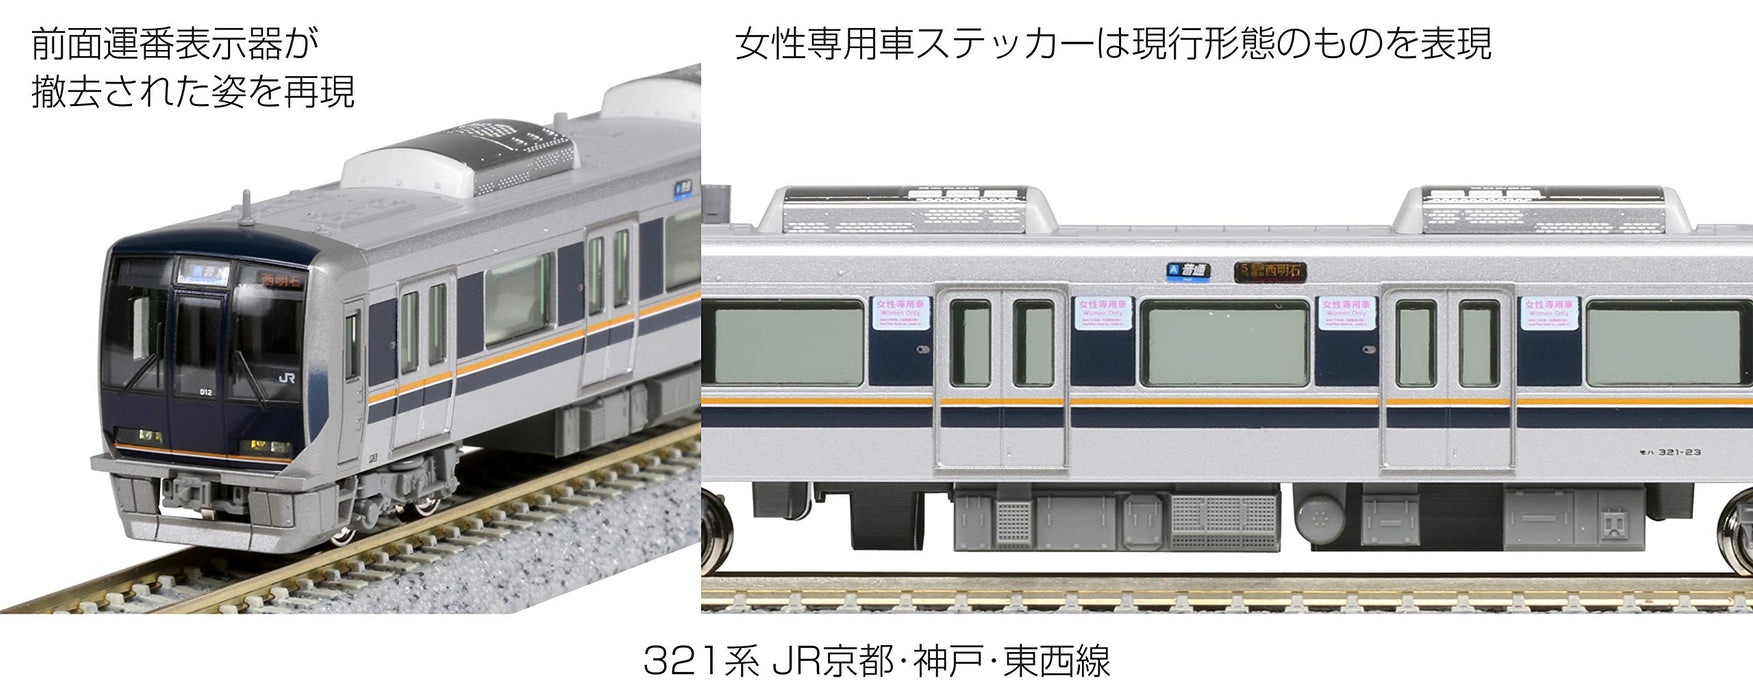 Kato N Gauge 321 Kyoto/Kobe/Tozai 3 Car Set 10-1574 Model Railway Train